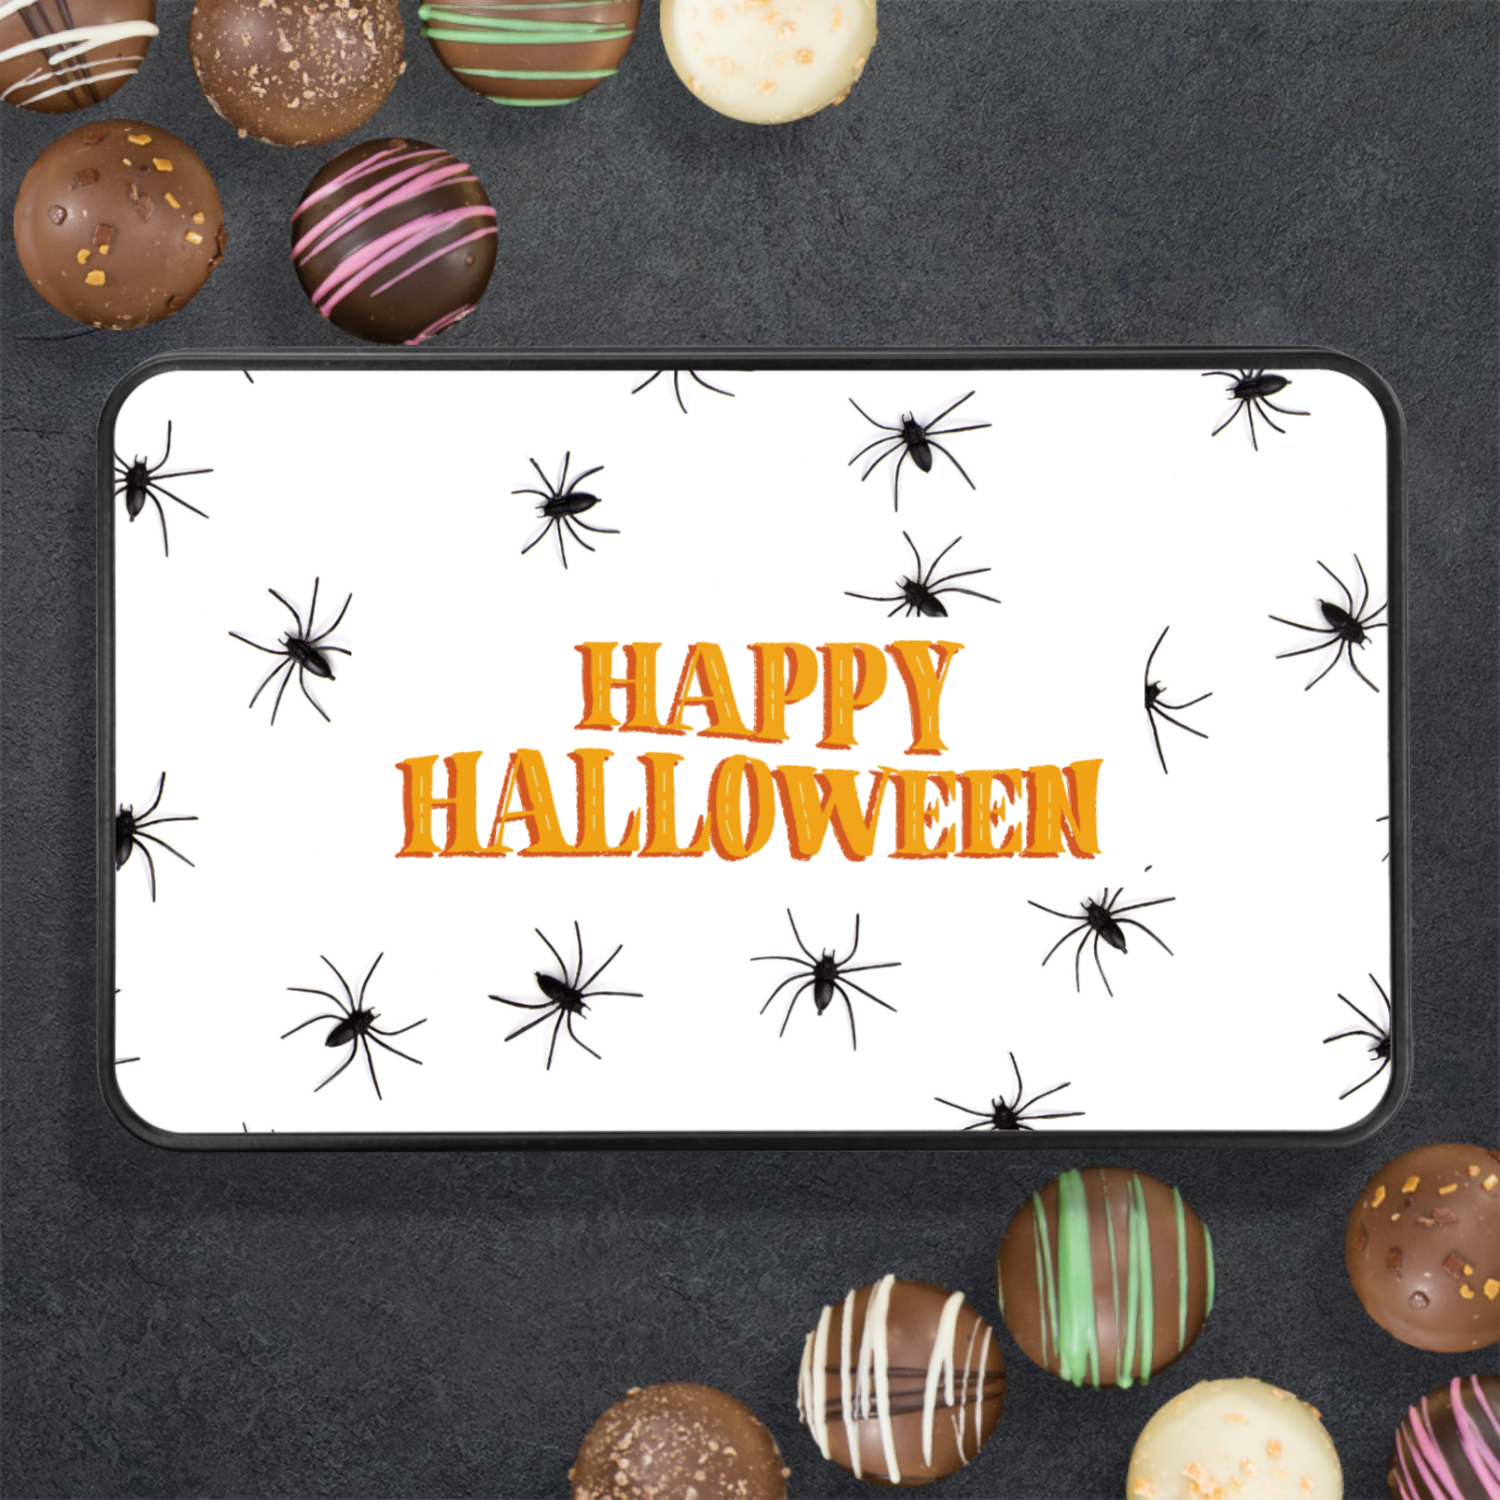 Halloween Chocolate Gift Box, Gourmet Chocolates Candy - Mardonyx Candy